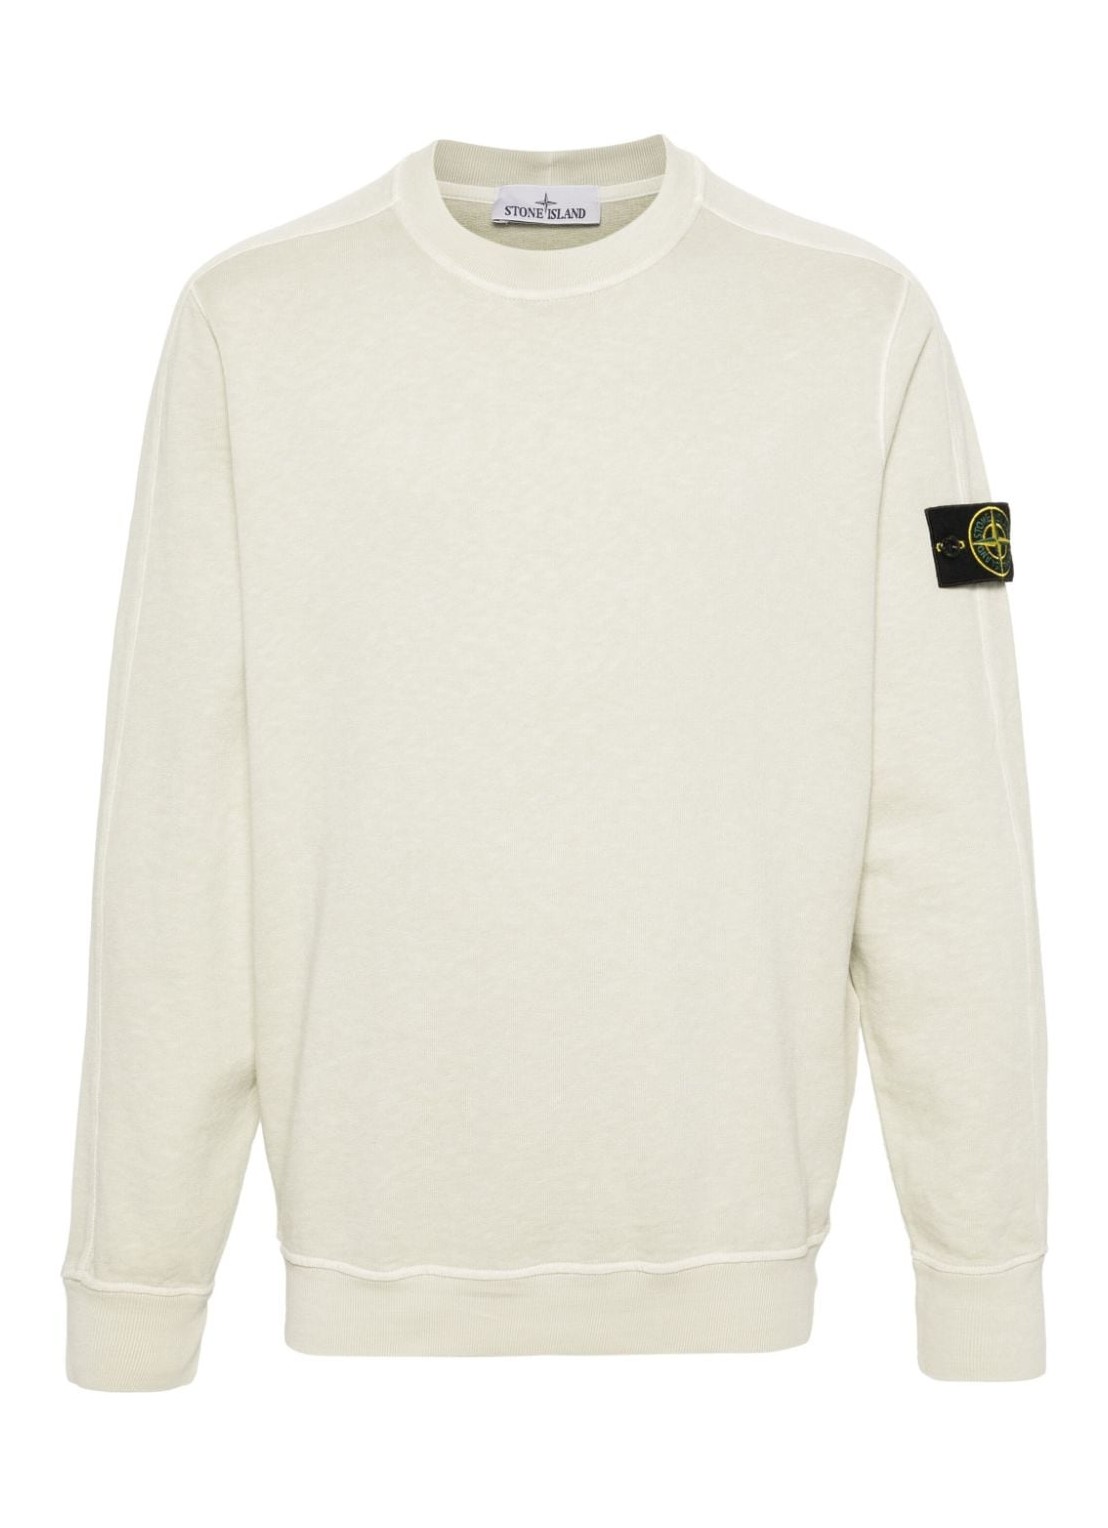 Sudadera stone island sweater man sweat-shirt 801566060 v0151 talla L
 